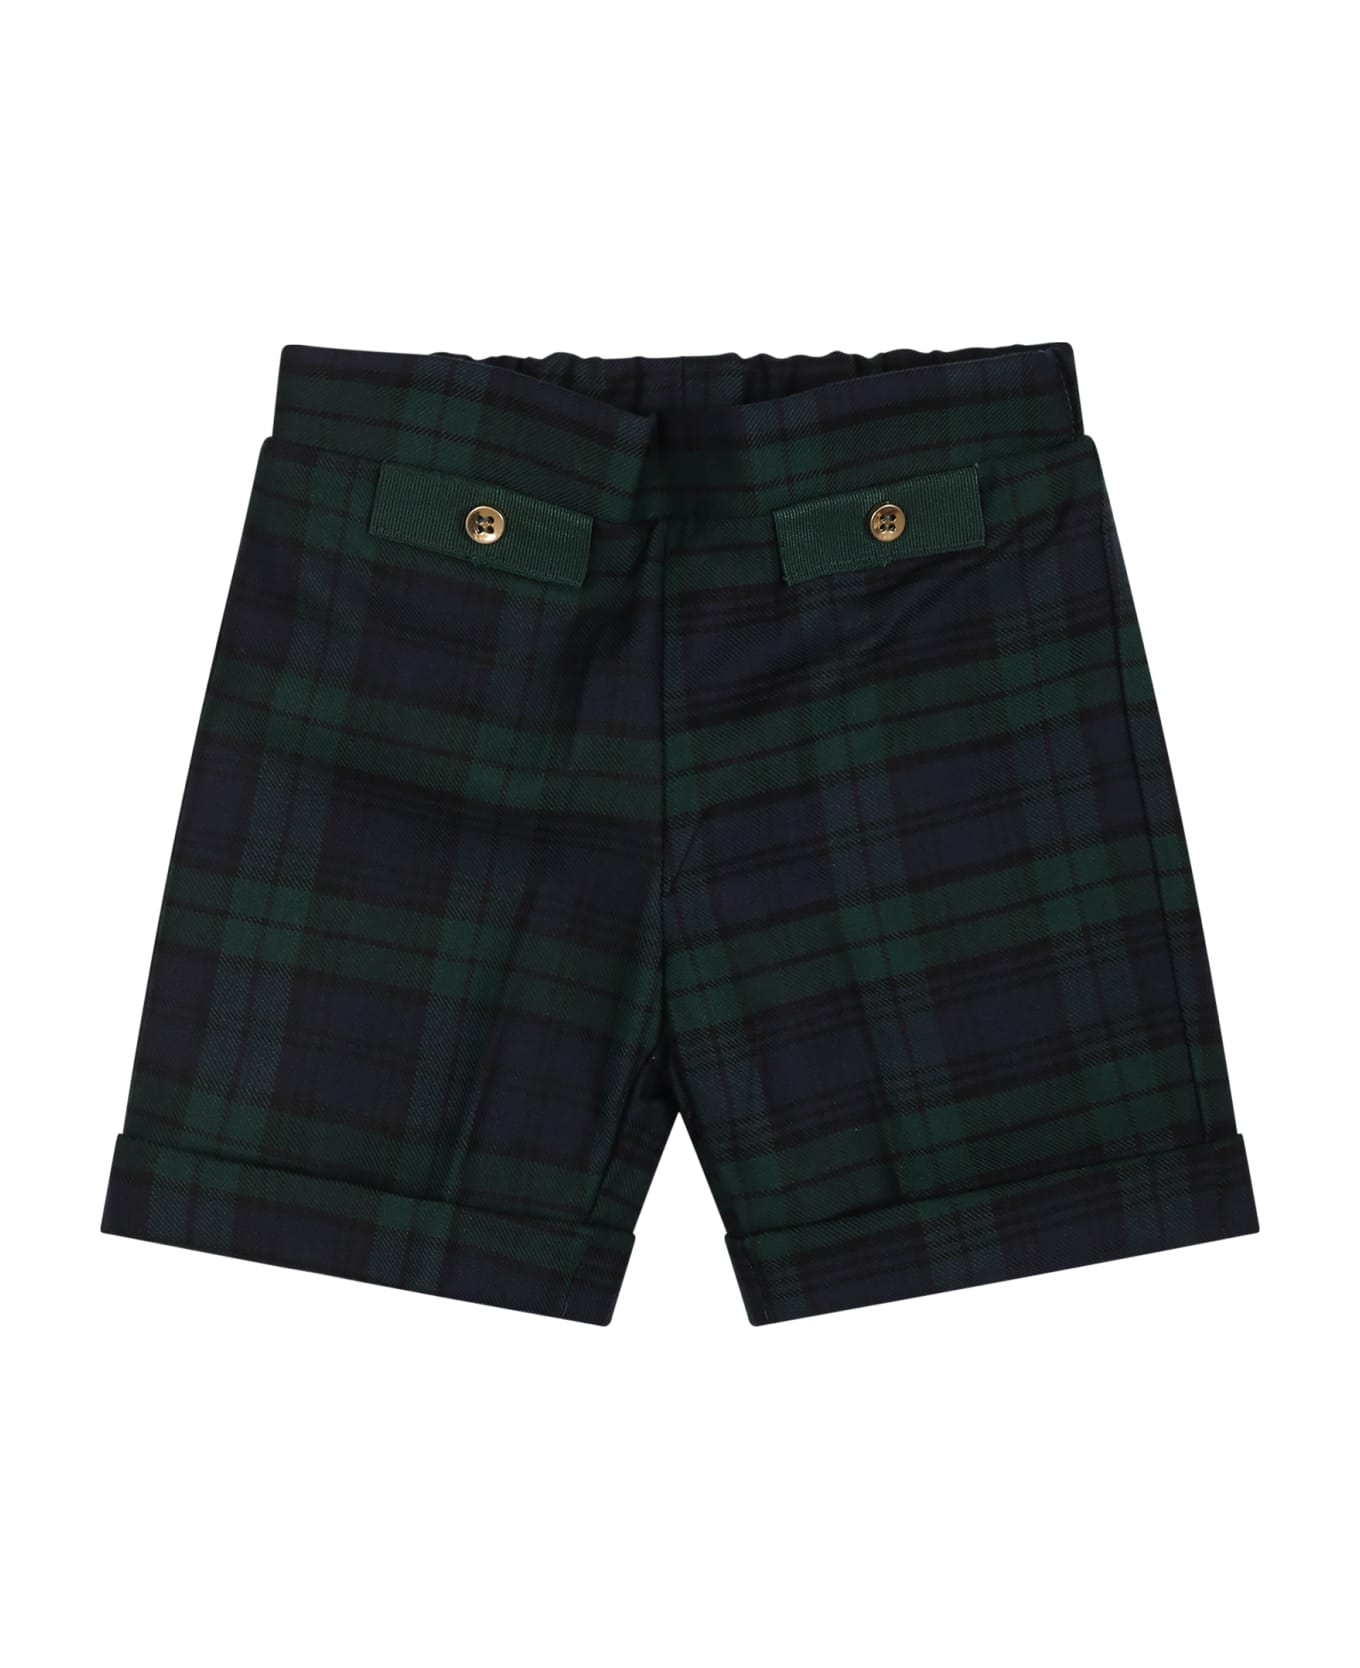 La stupenderia Green Shorts For Baby Boy - Green ボトムス